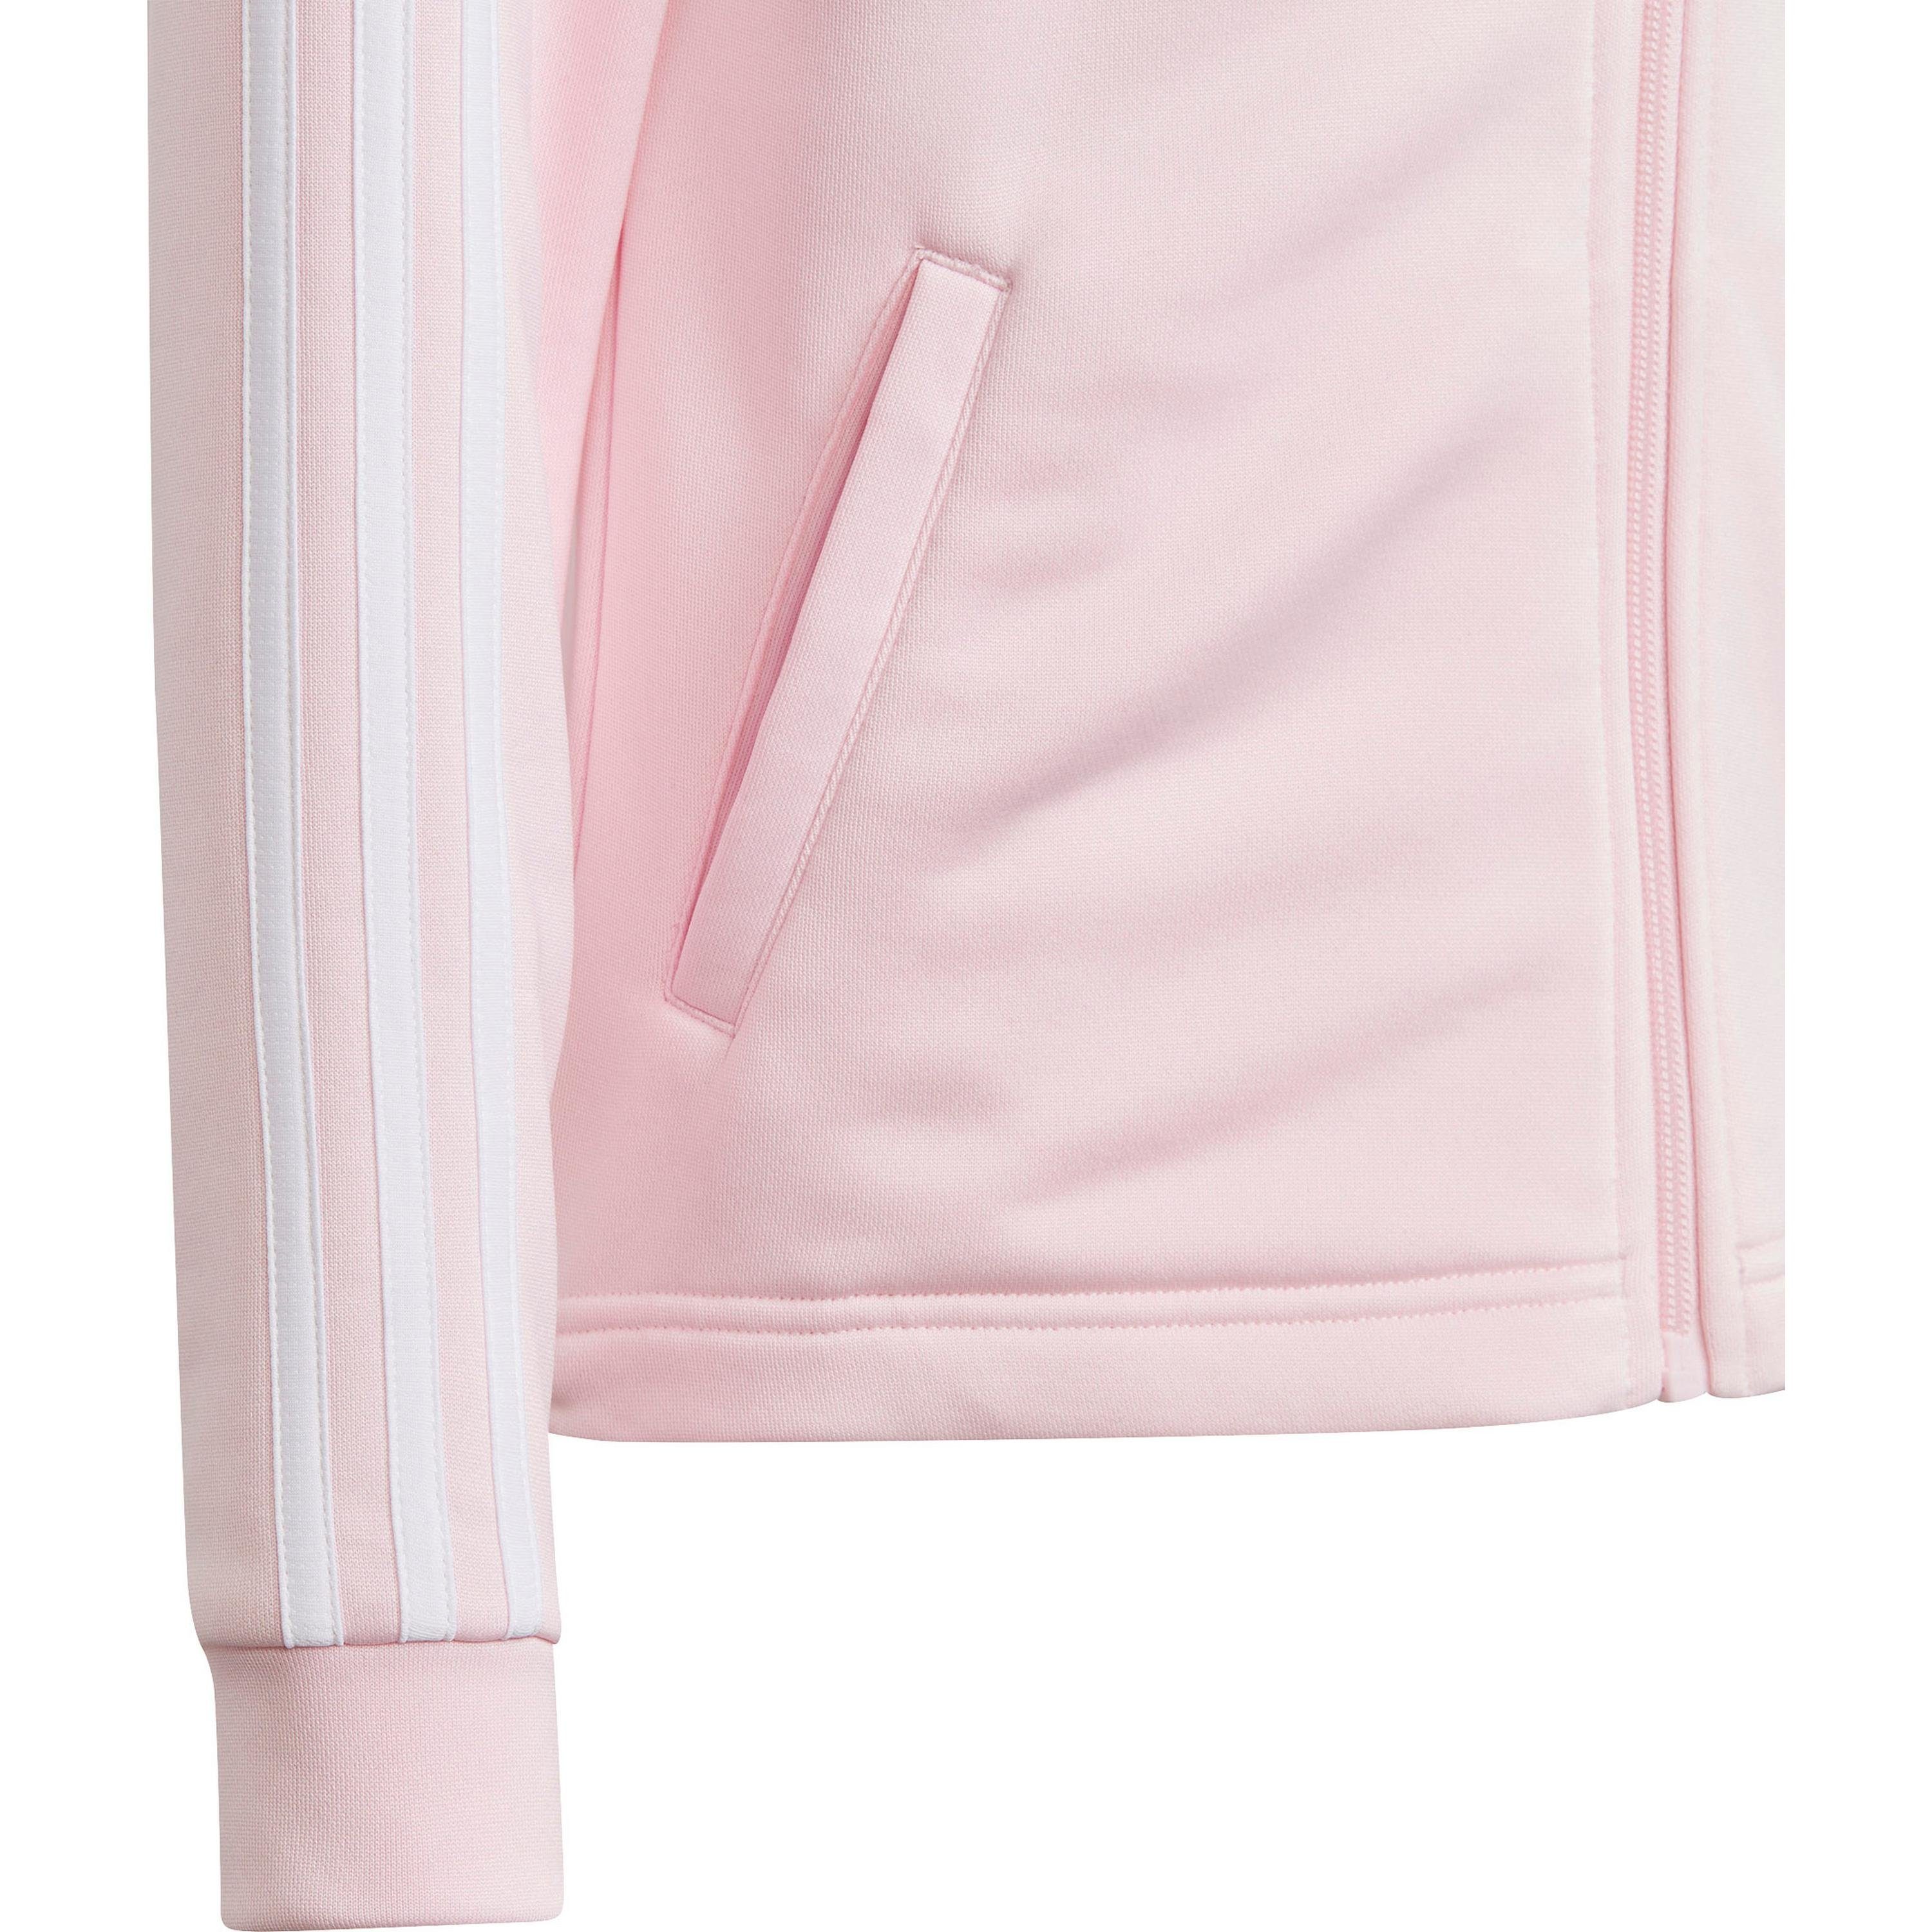 Performance Trainingsjacke pink-white adidas clear